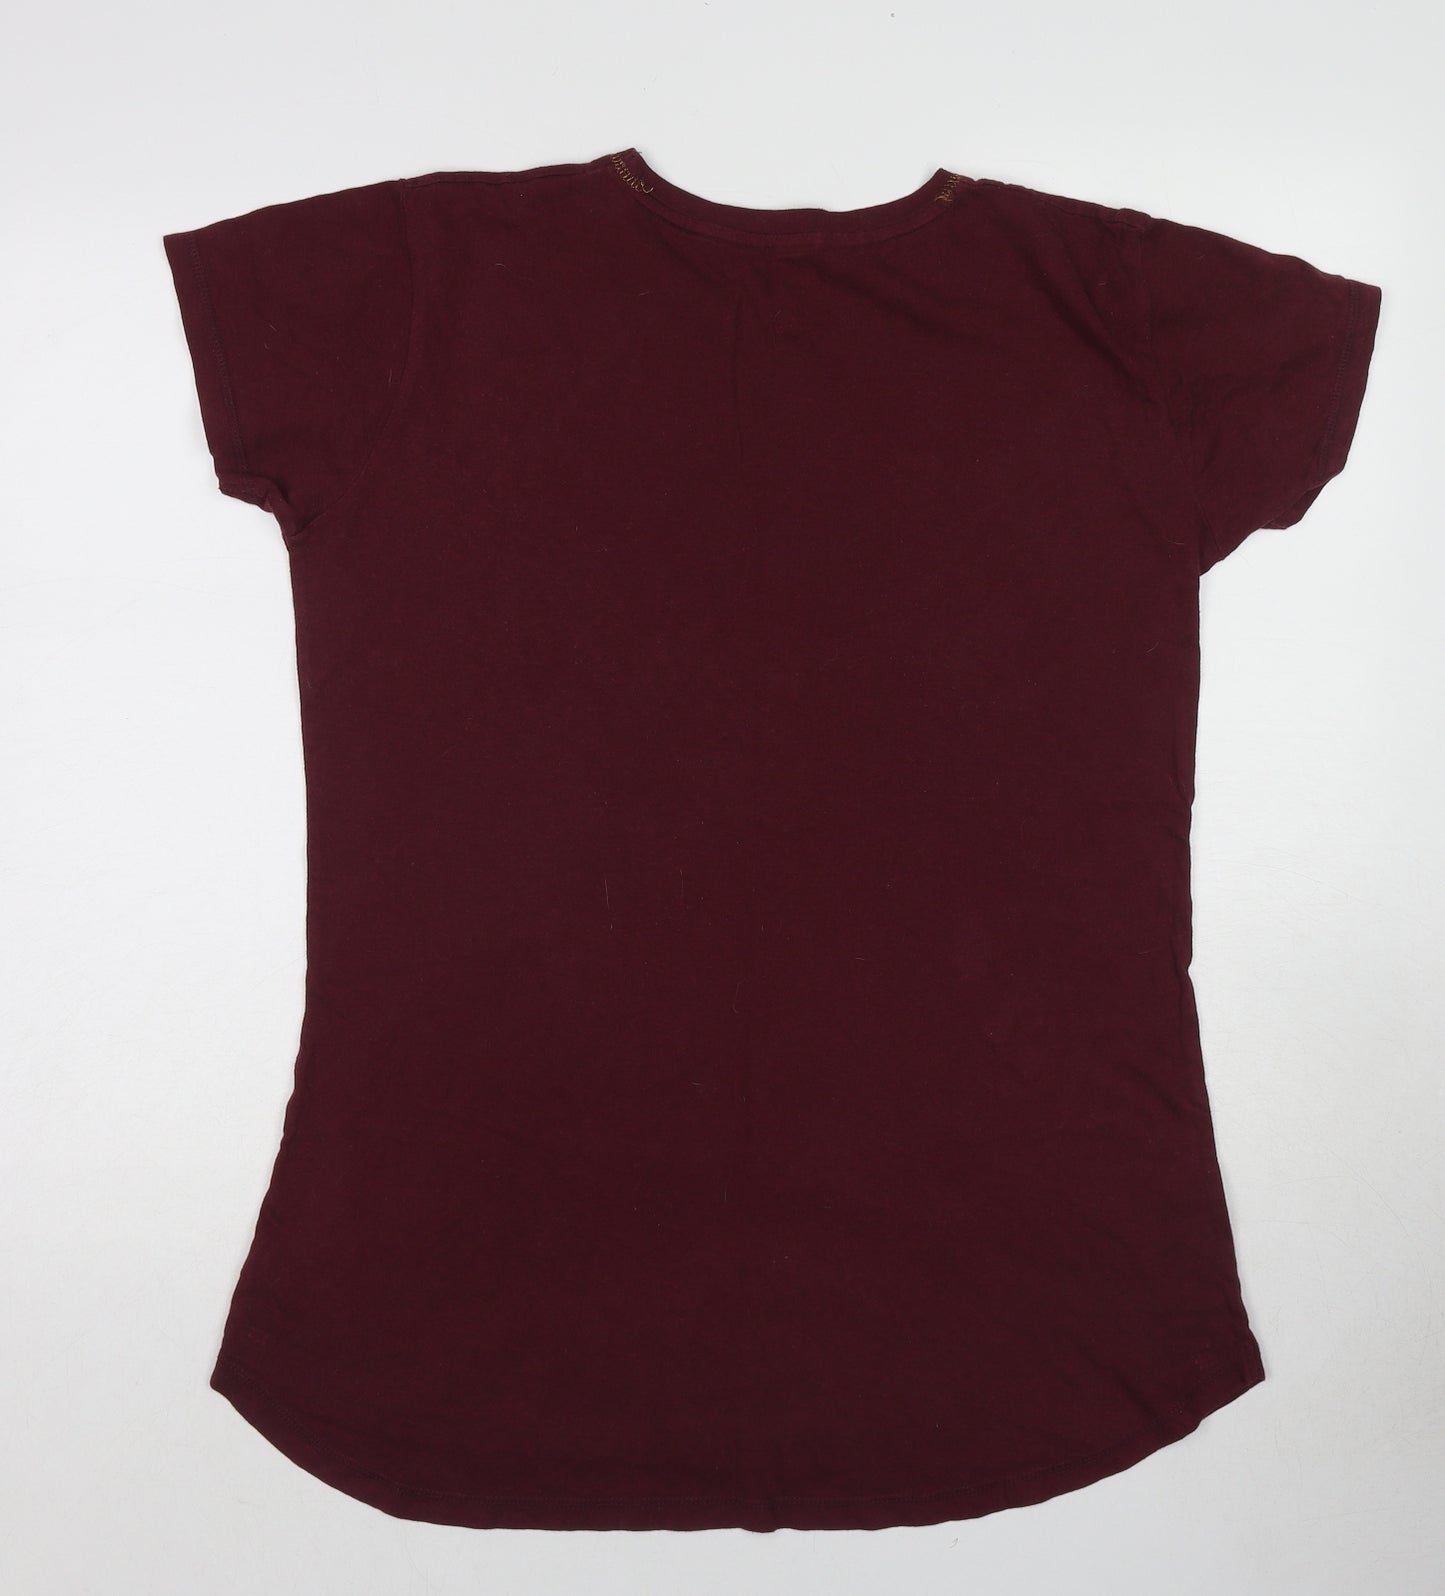 Disney Womens Red Cotton Basic T-Shirt Size 10 Round Neck - Size 10-12 Hogwarts School